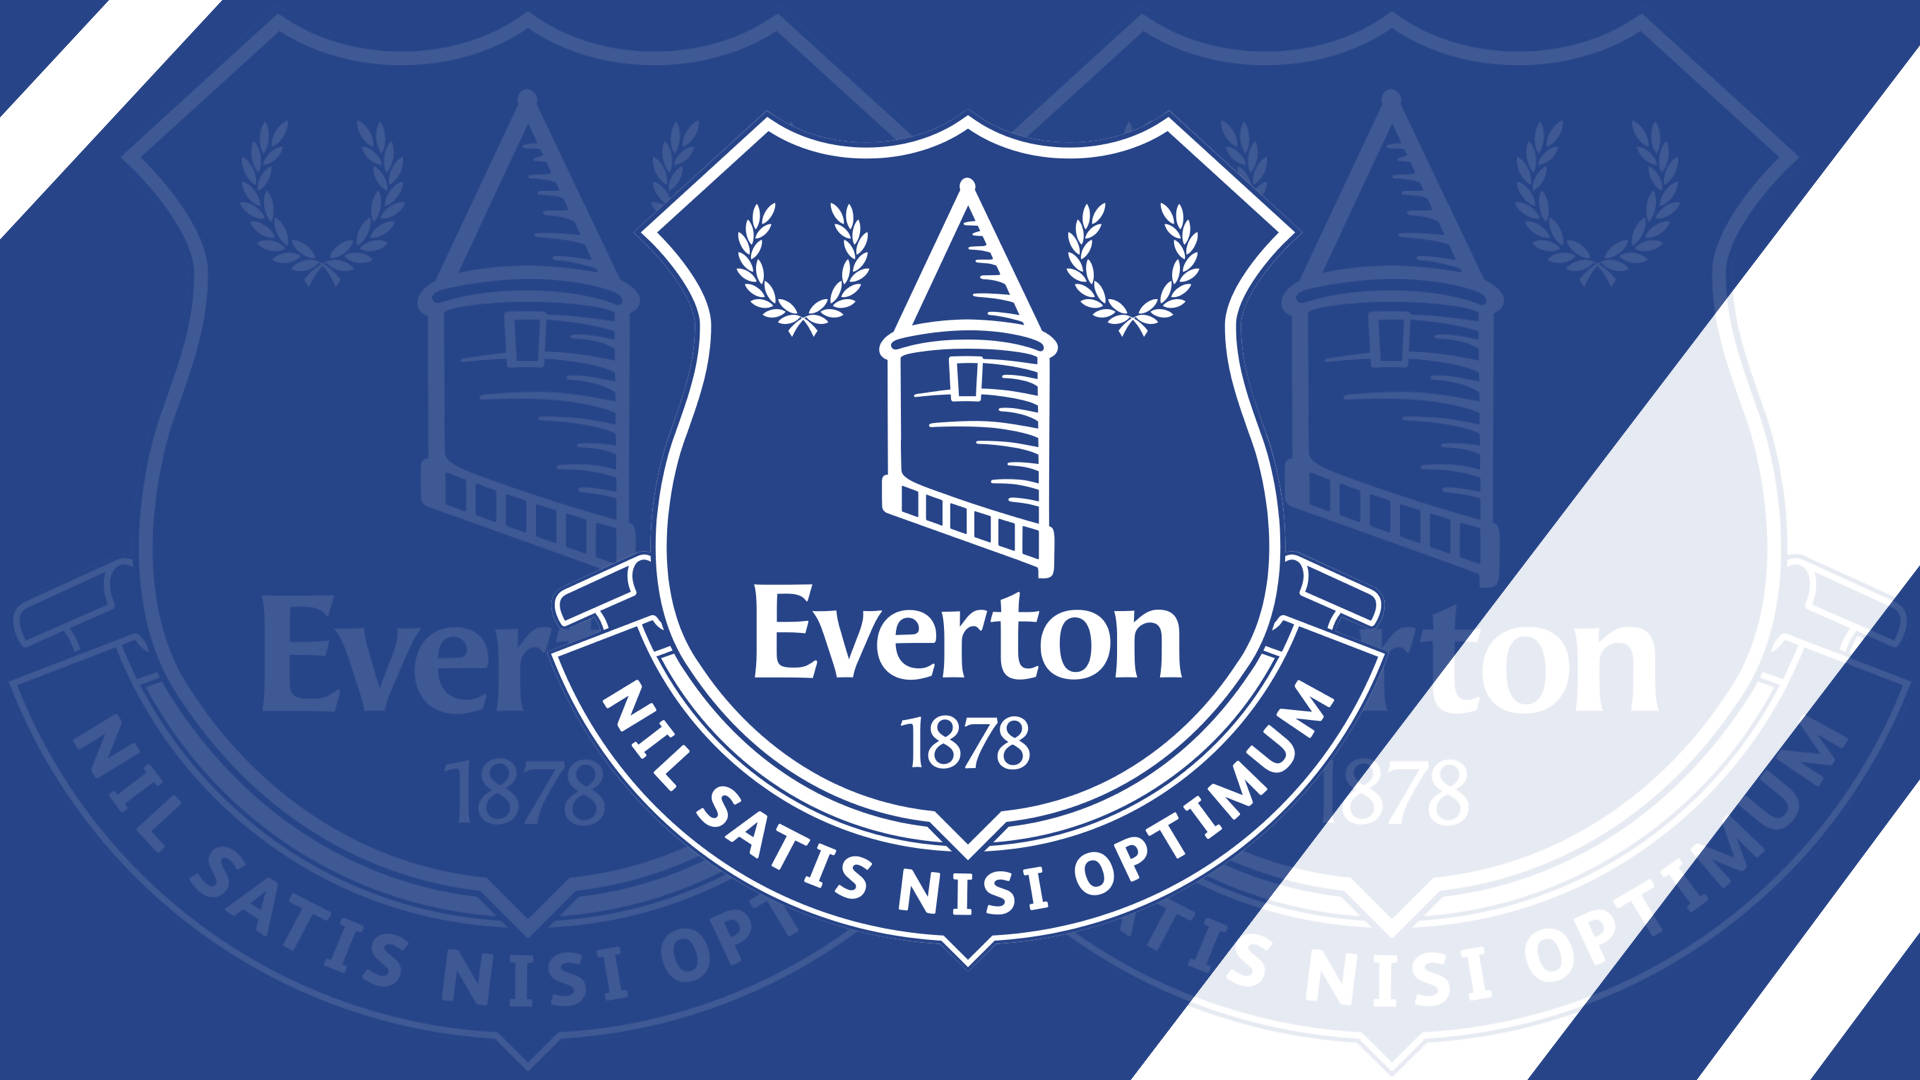 Everton F.c. The Blues